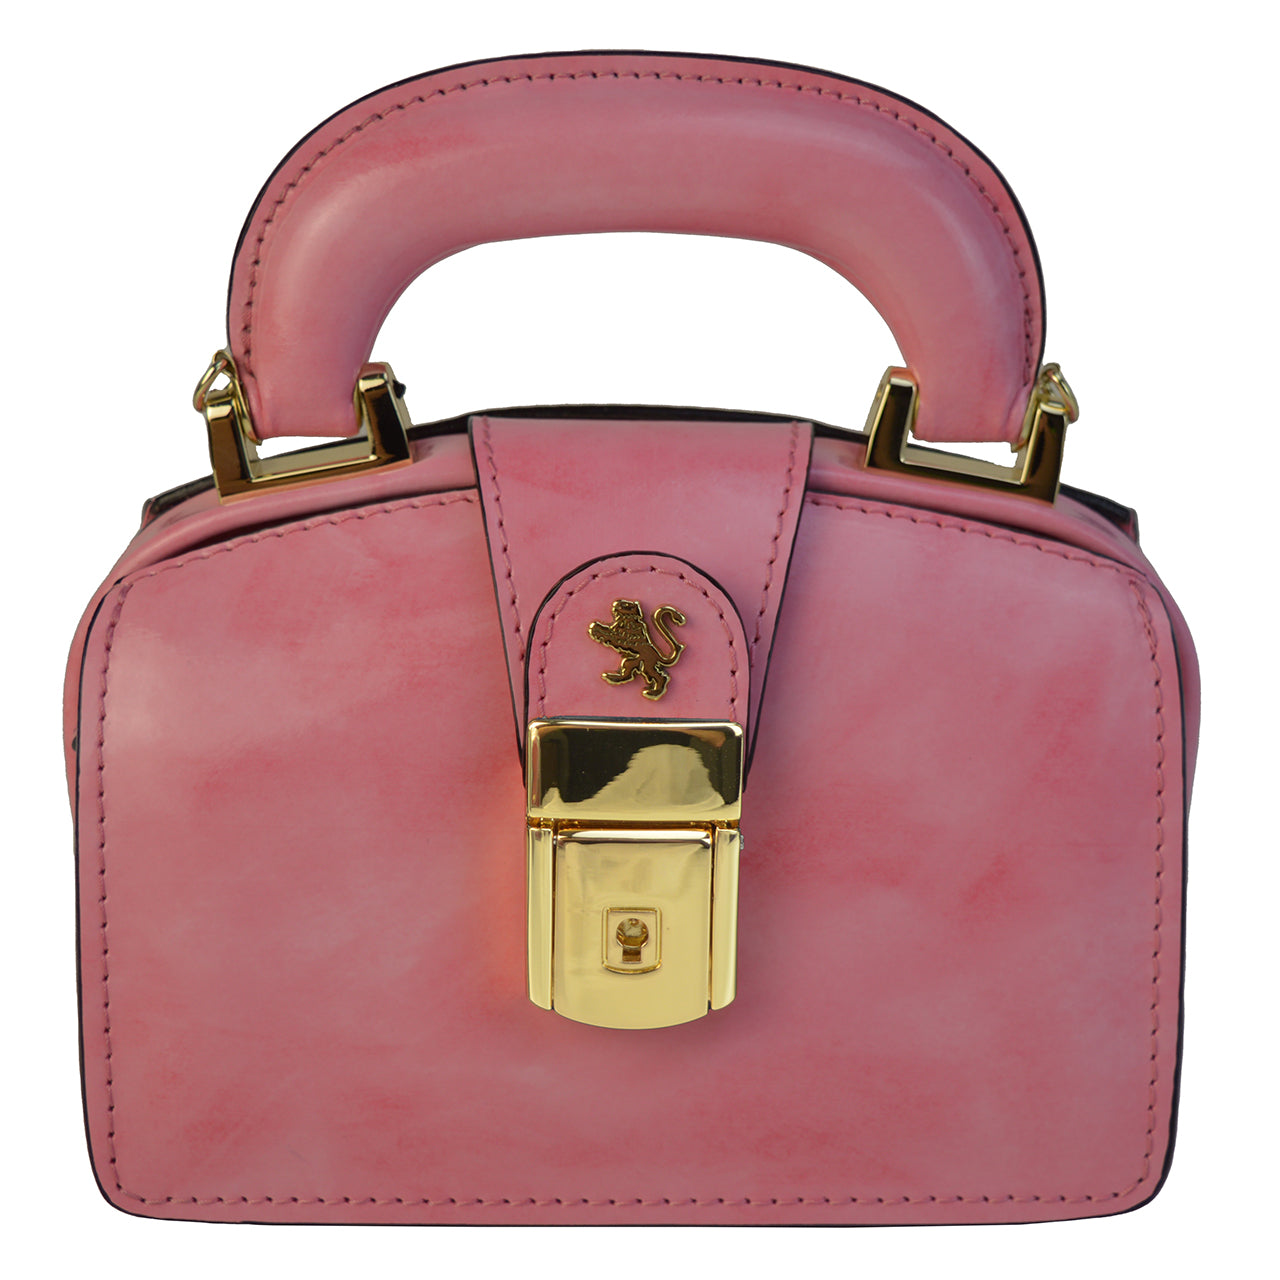 Pratesi Lady 18 Brunelleschi in genuine Italian leather - Brunelleschi Leather Pink